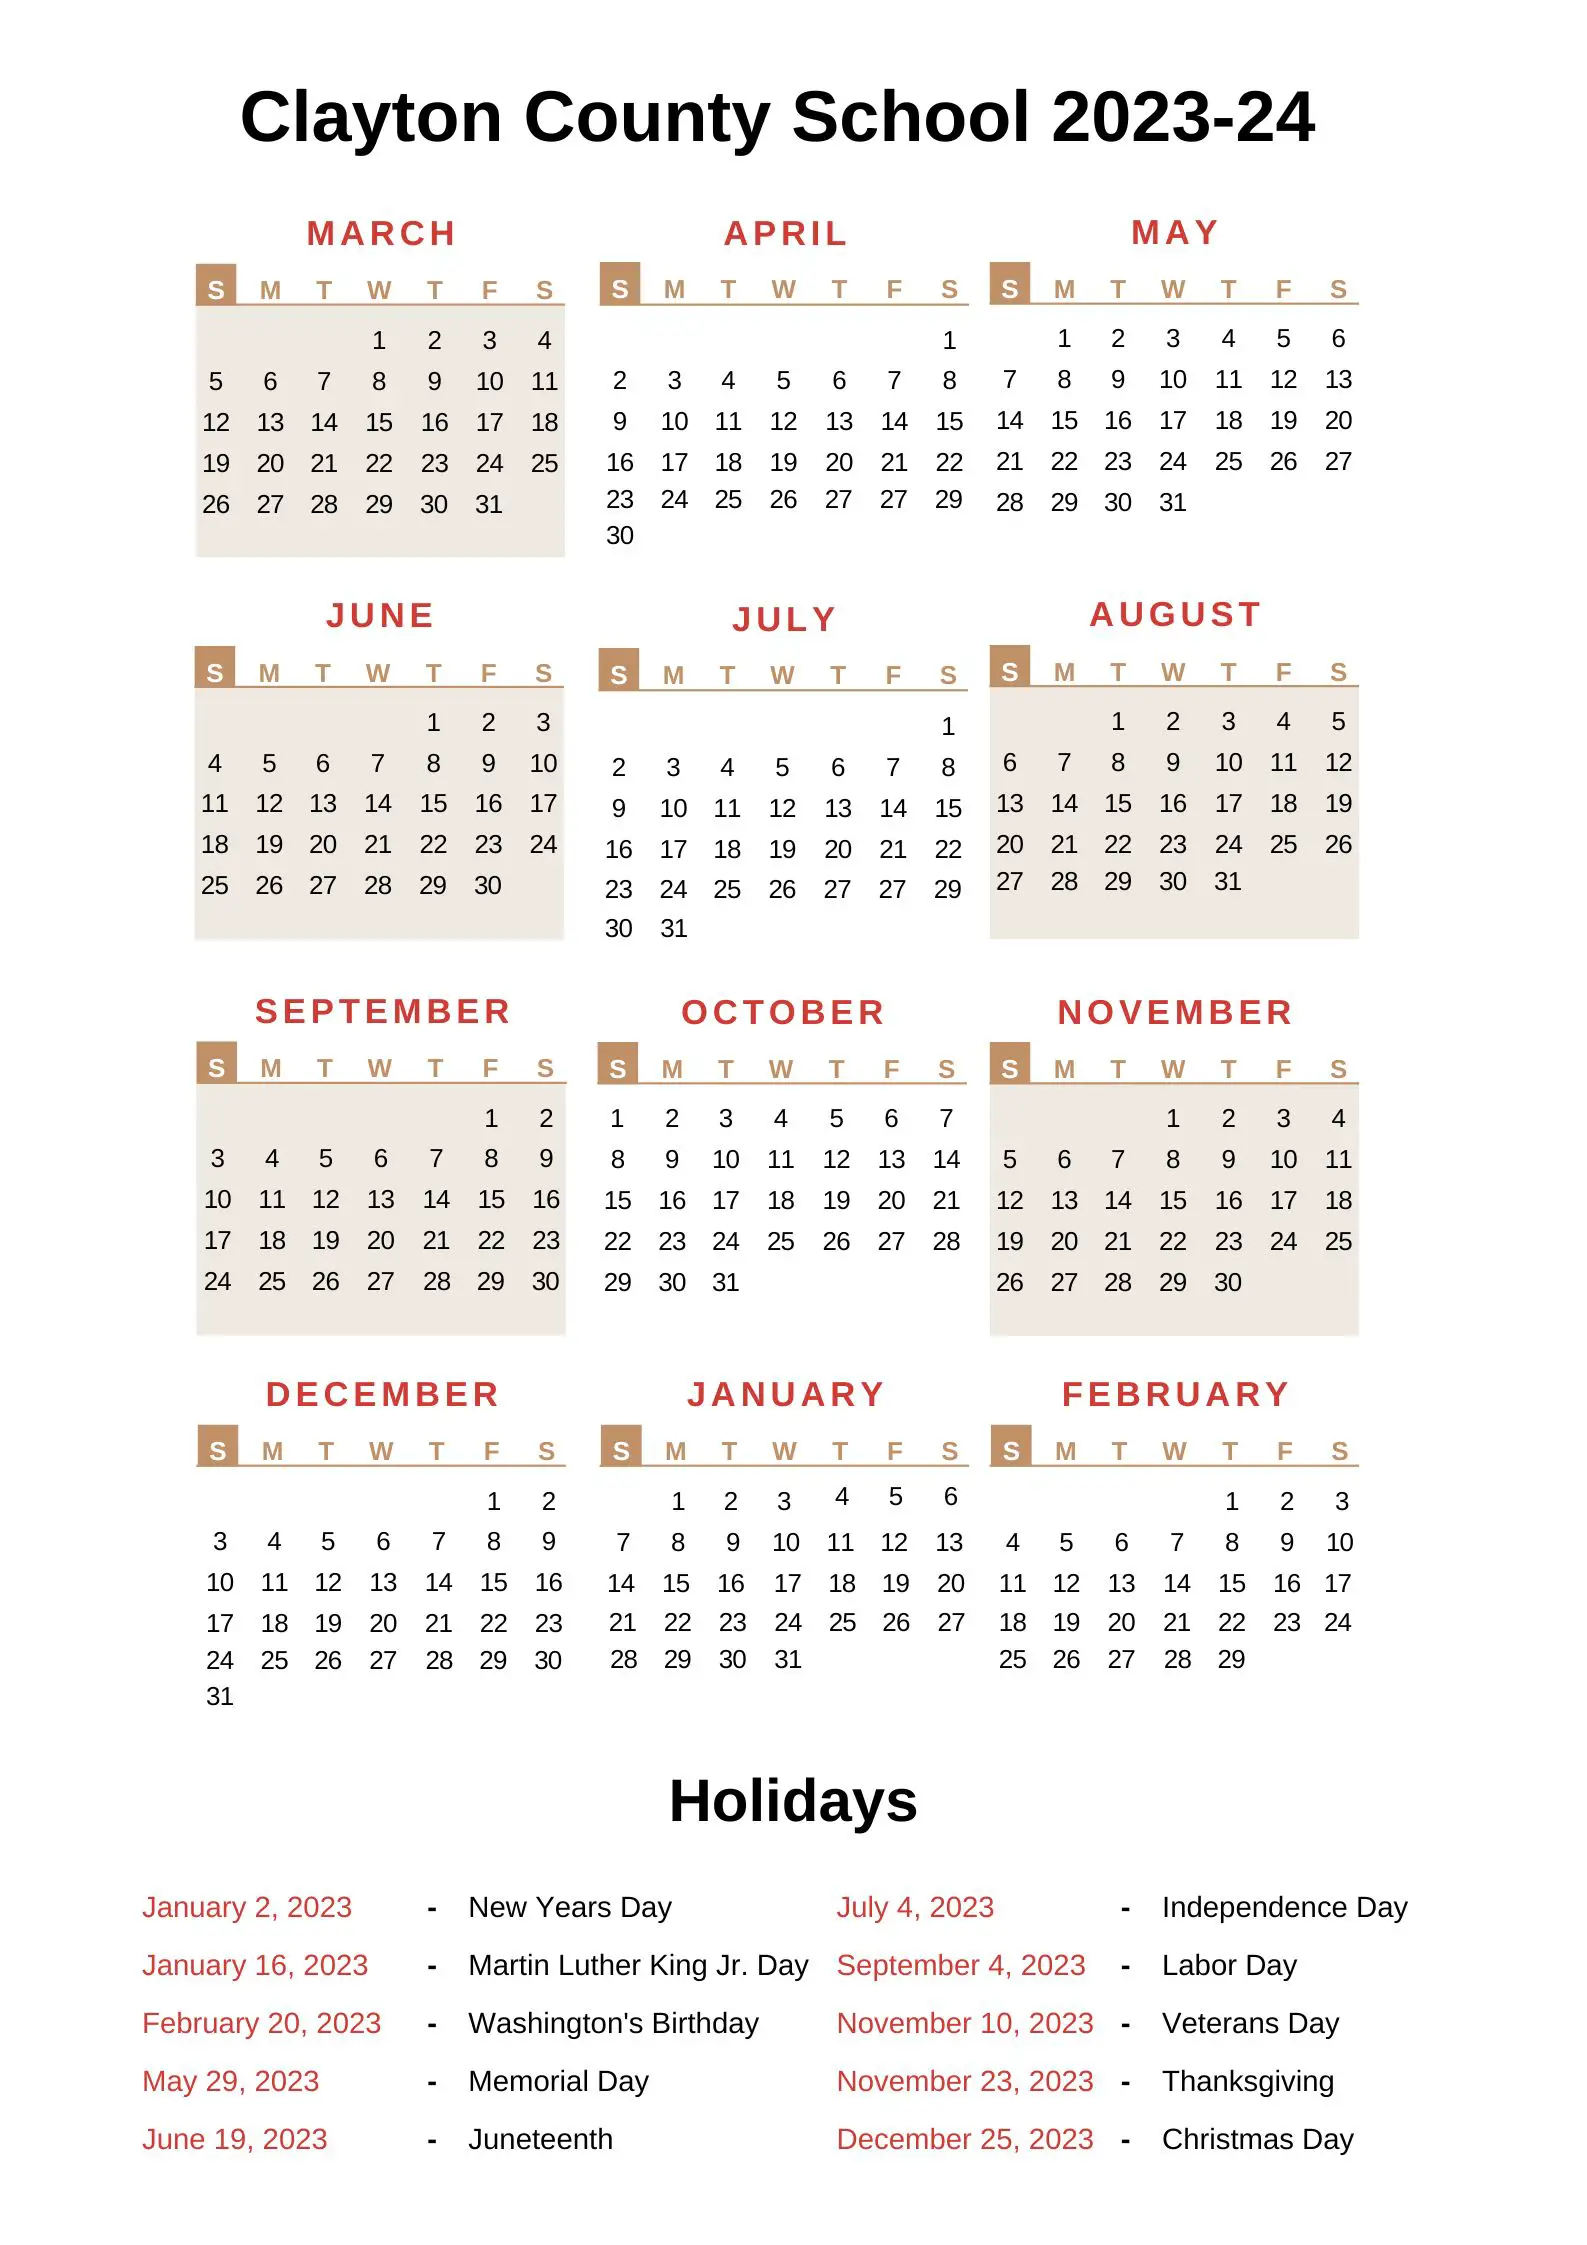 Clayton County Schools Calendar 2023-24 [CCS] with Holidays